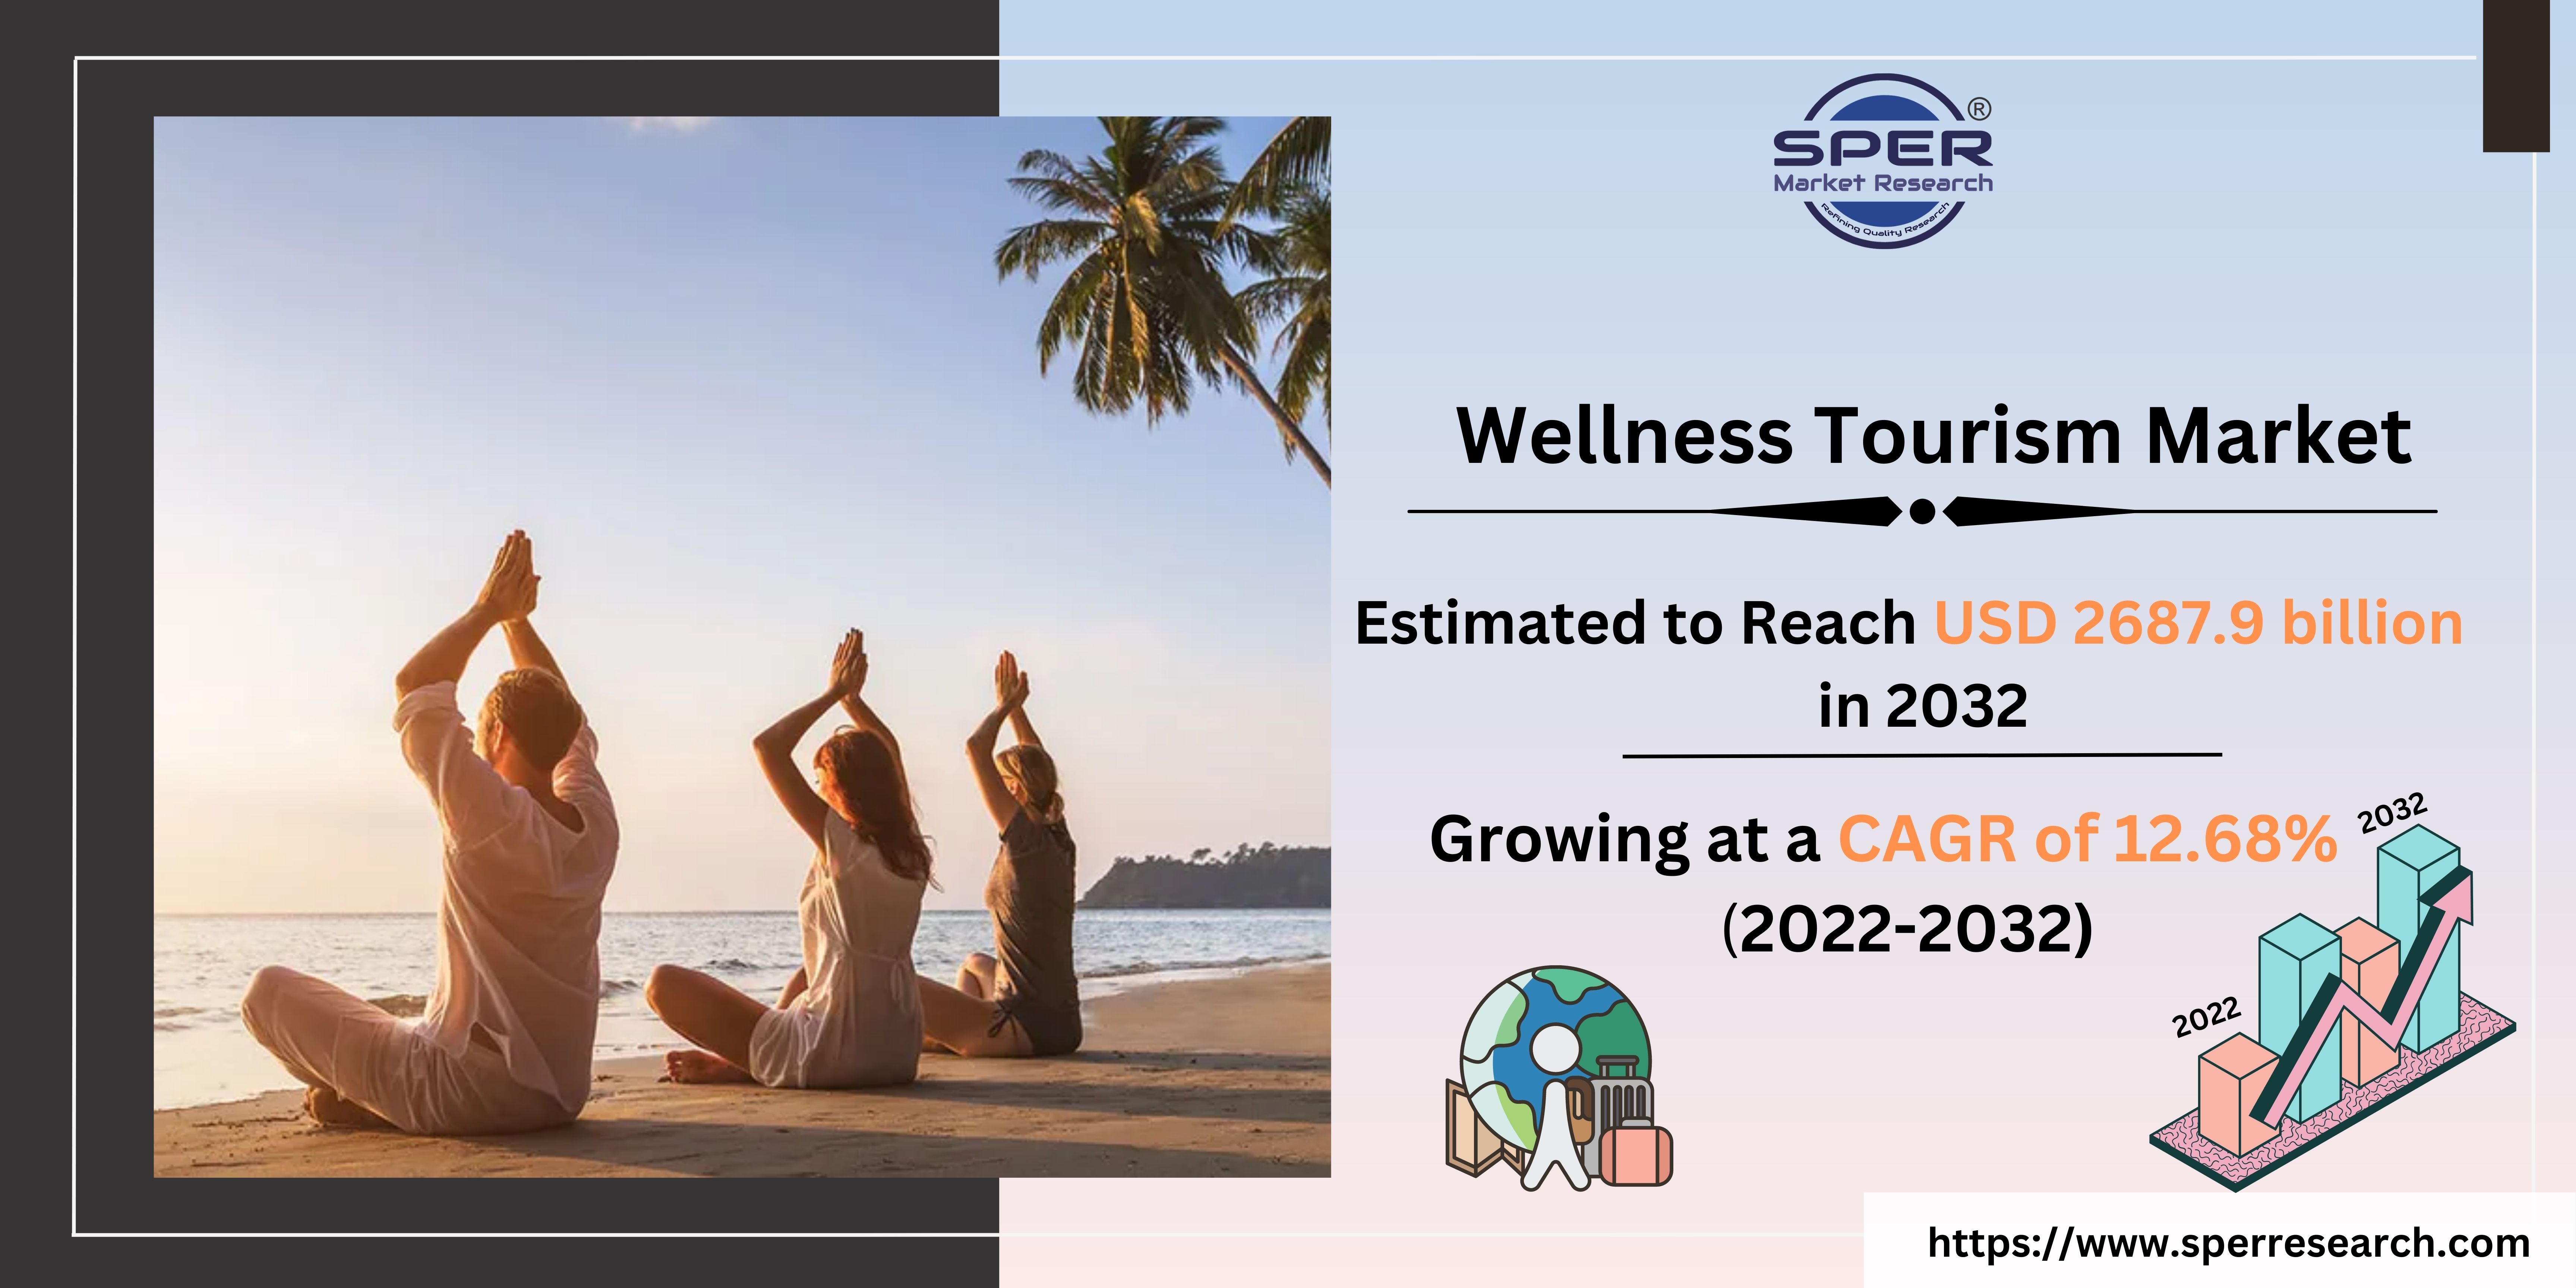  Wellness Tourism Market